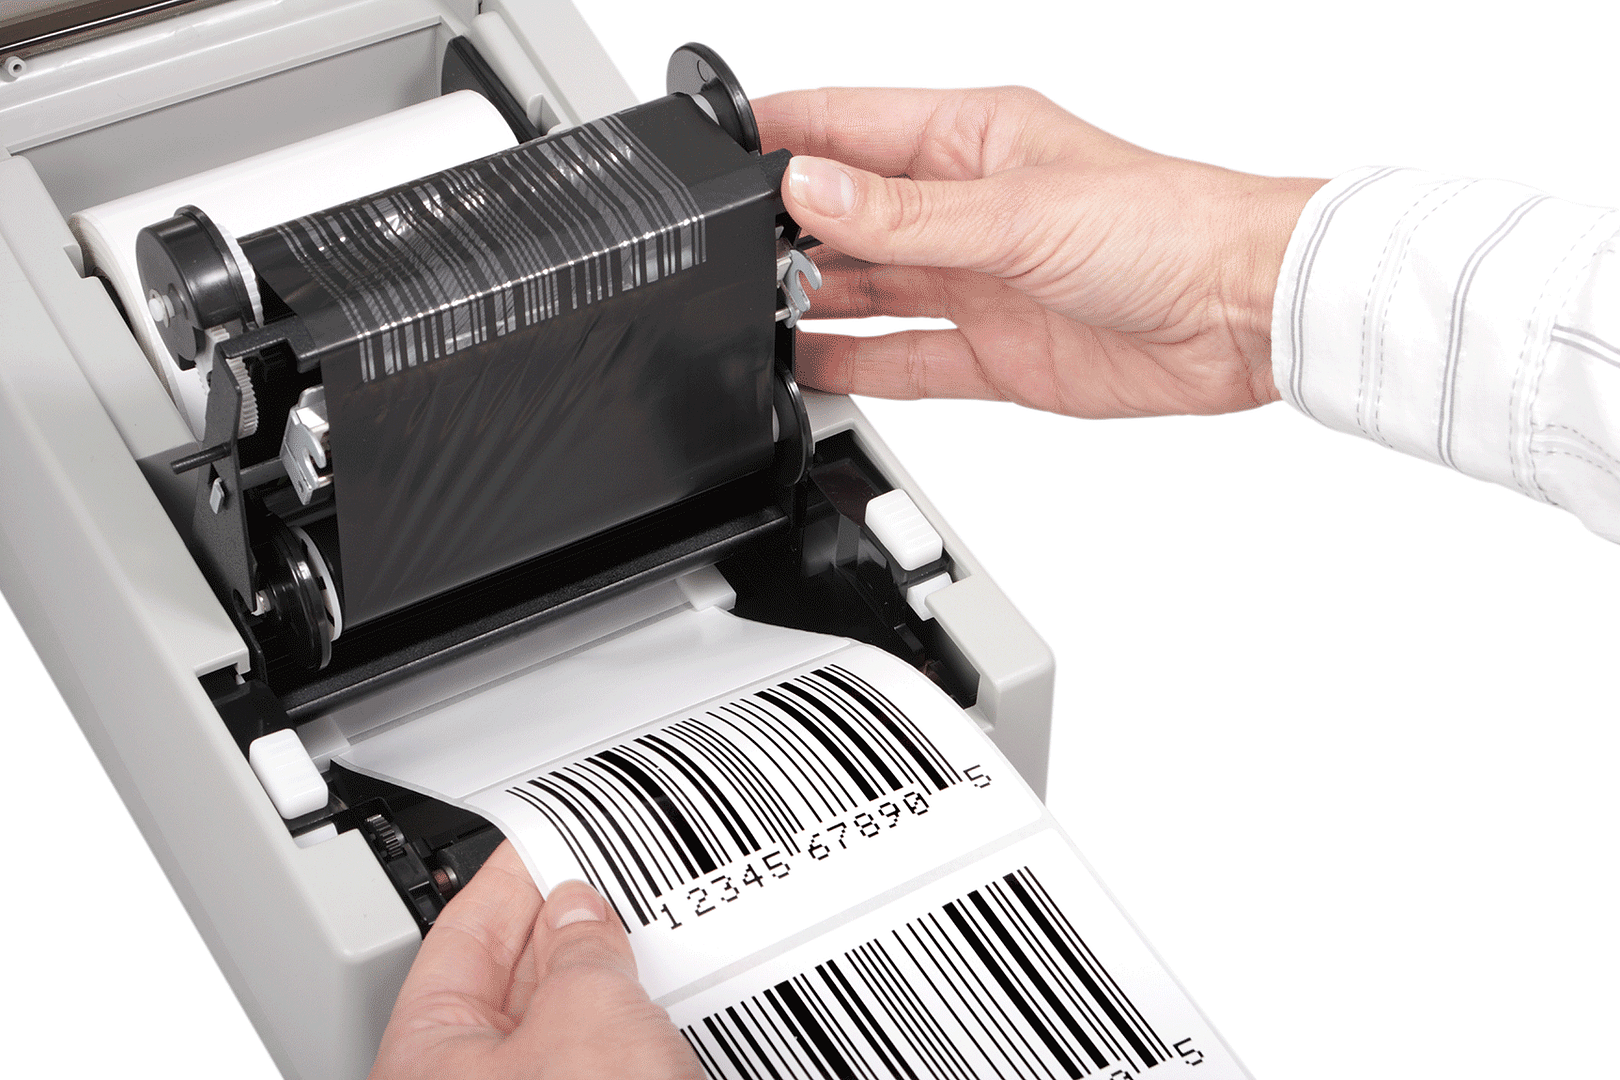 desktop printer hands opened barcode printed